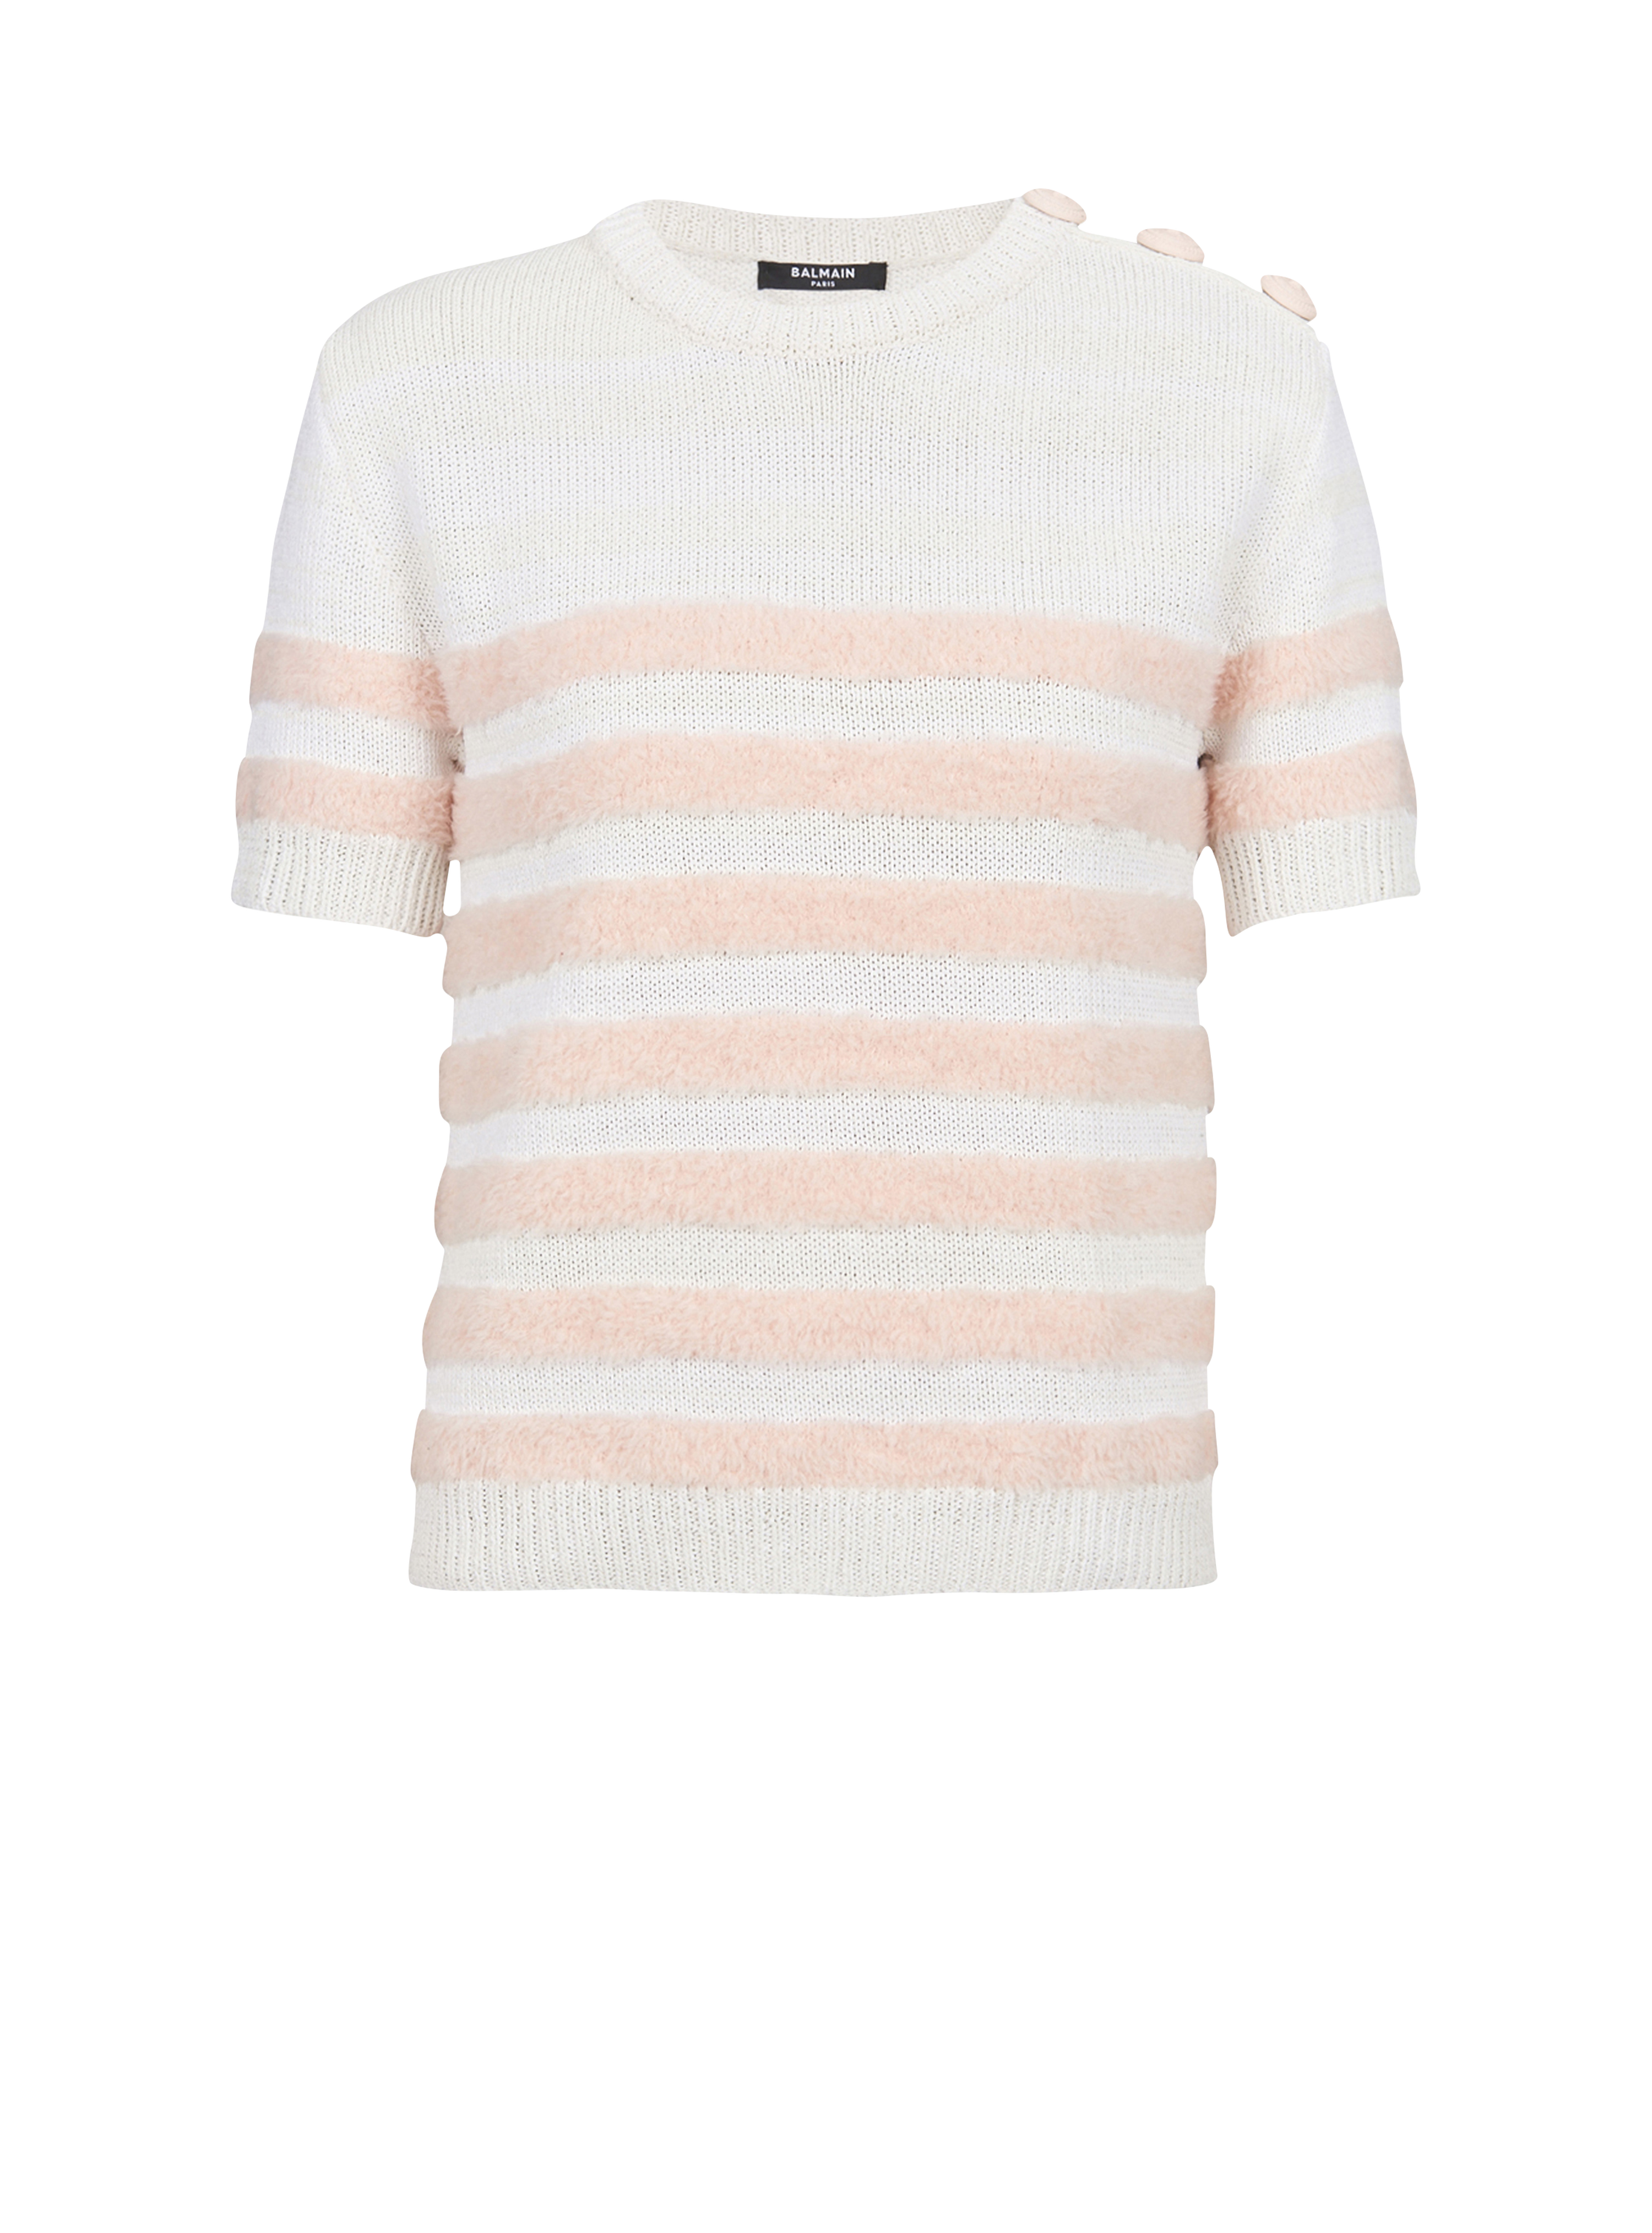 Knit T-shirt, pink